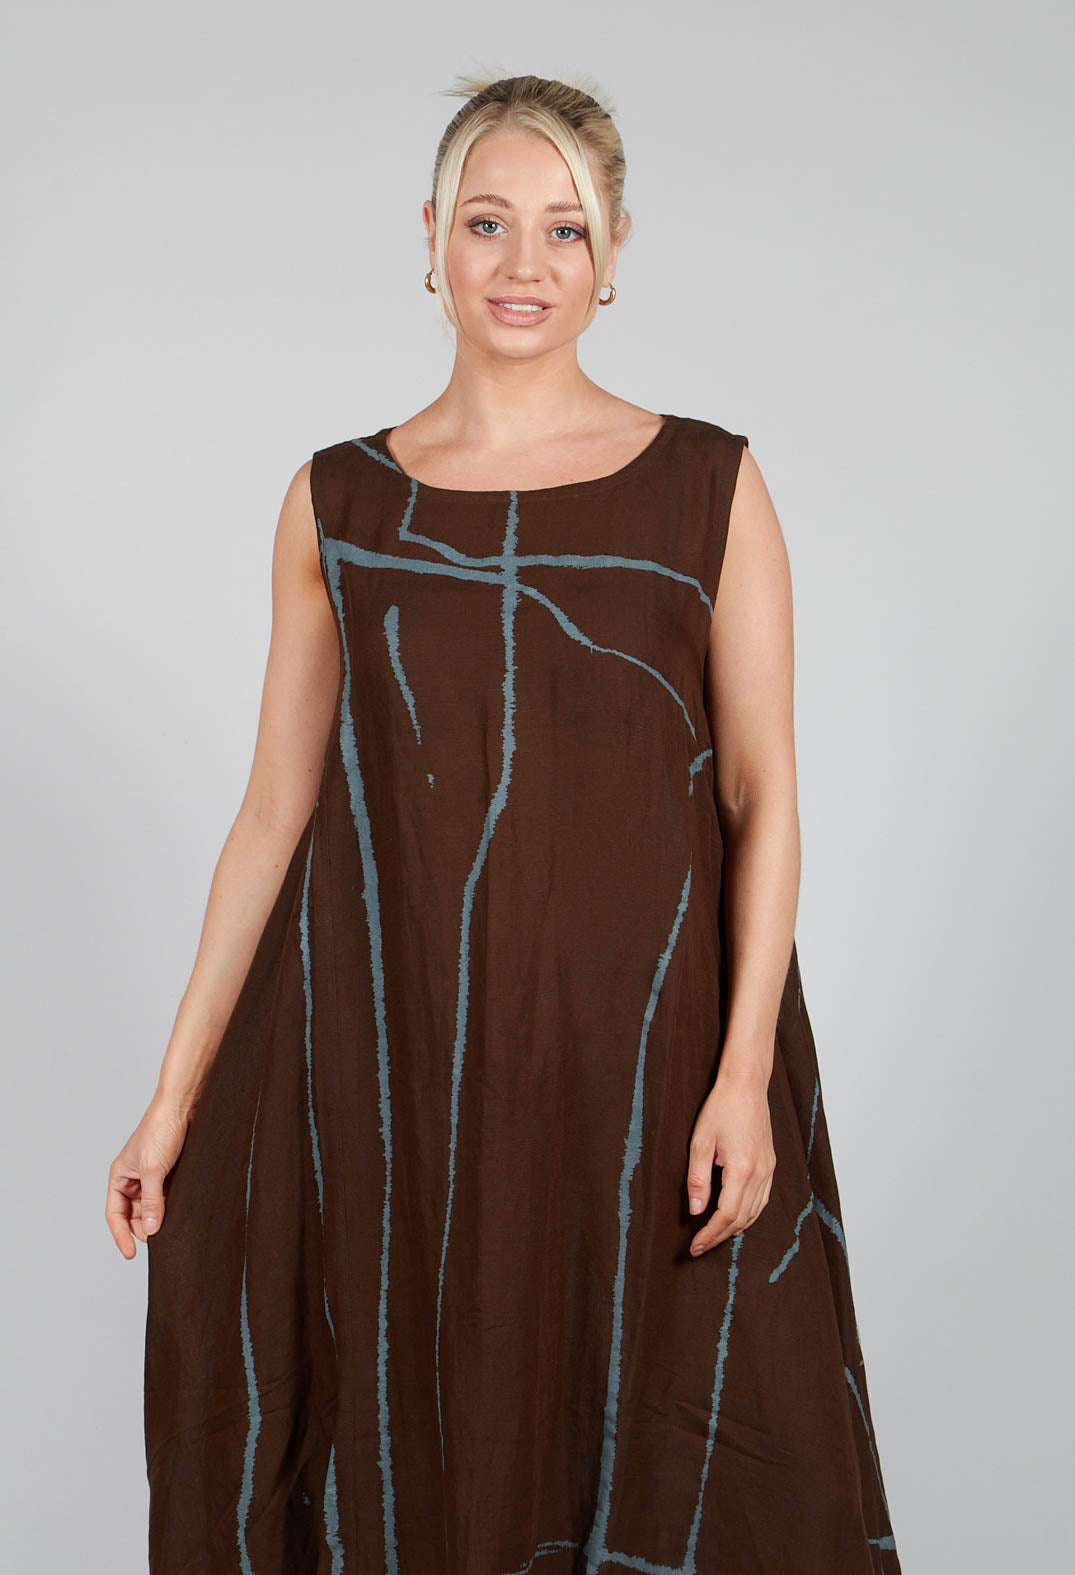 Oversized Dress in Brown Print